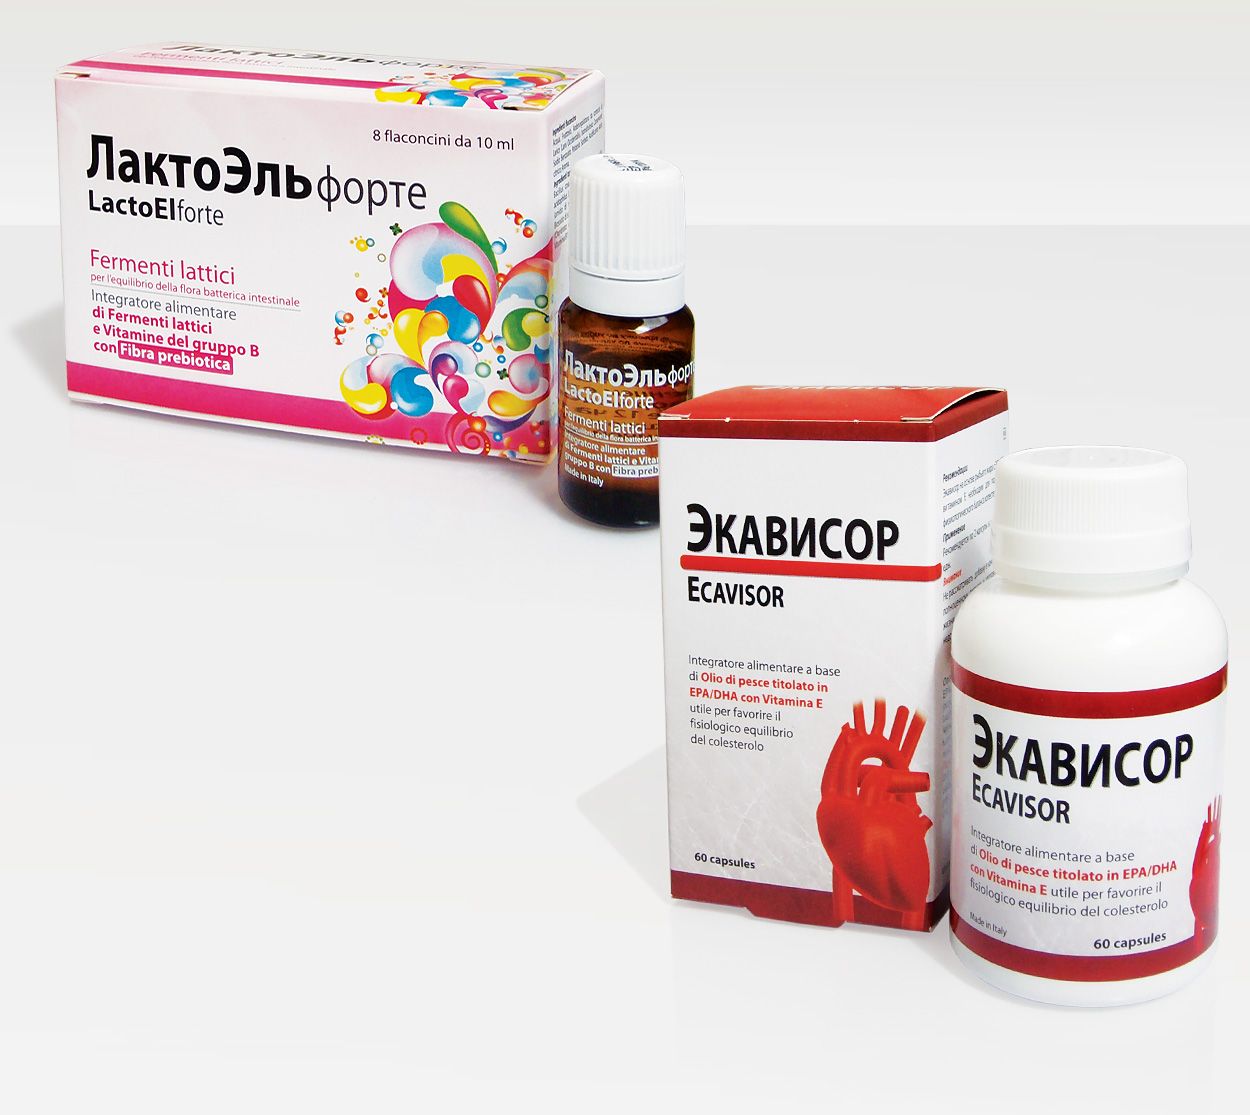 DanaPharm Medications-Medication Package Design for DanaPharm Pharmaceutical Company